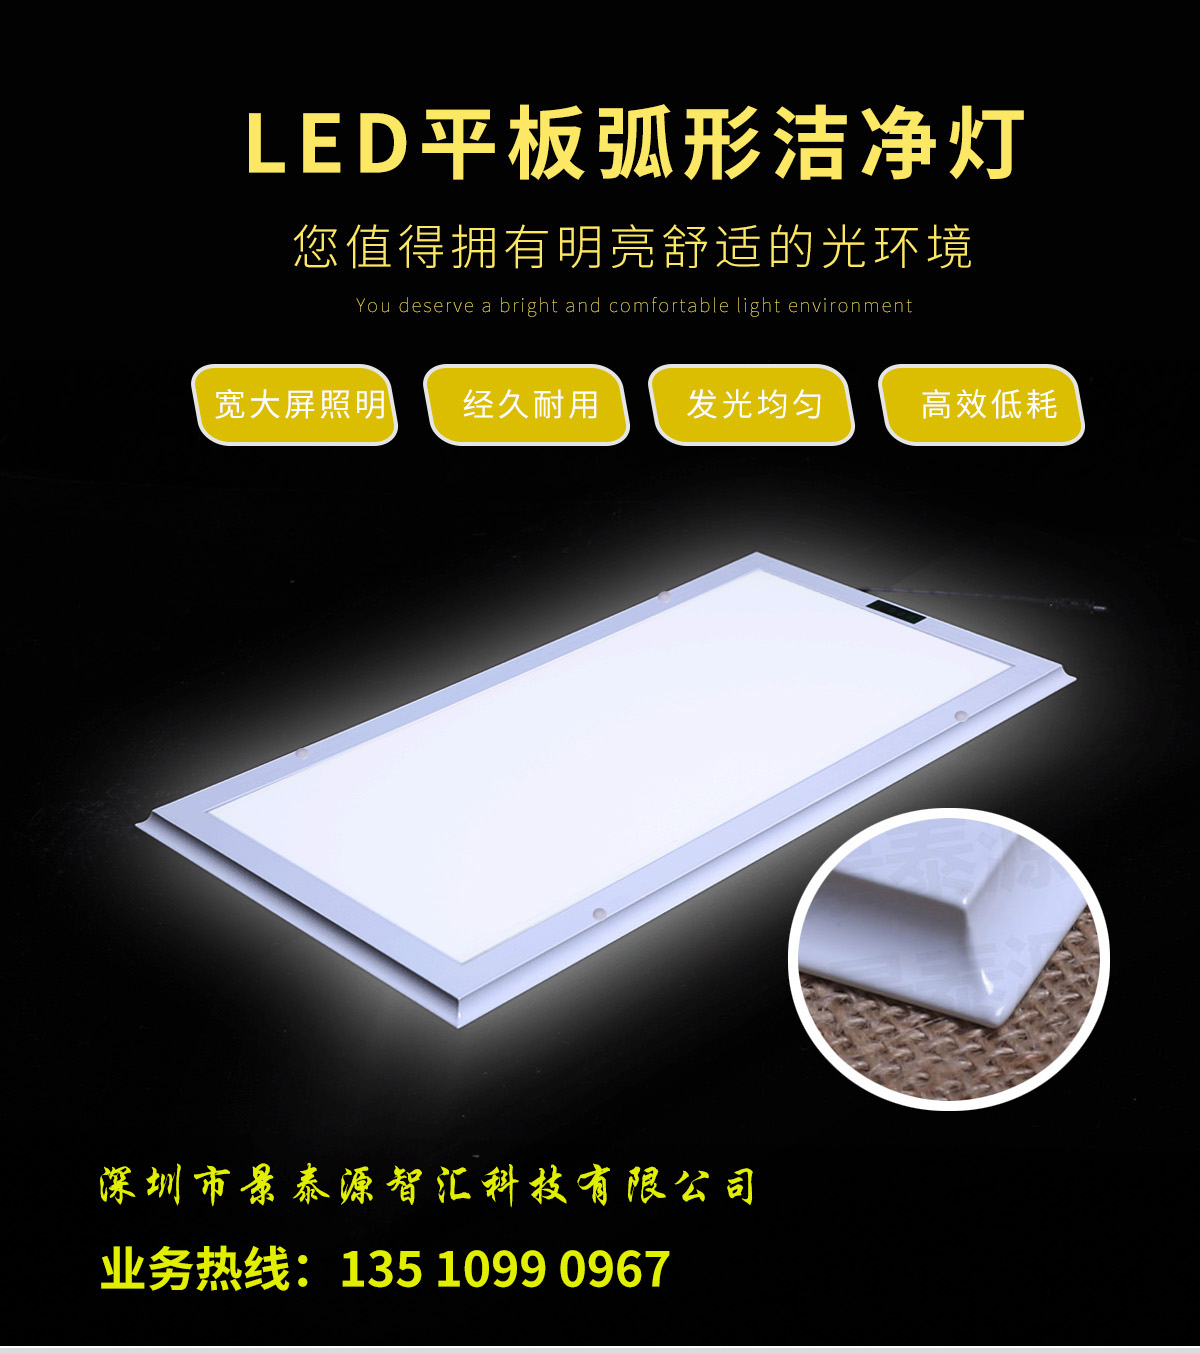 LED平板洁净灯的优势都体现在哪些方面呢？